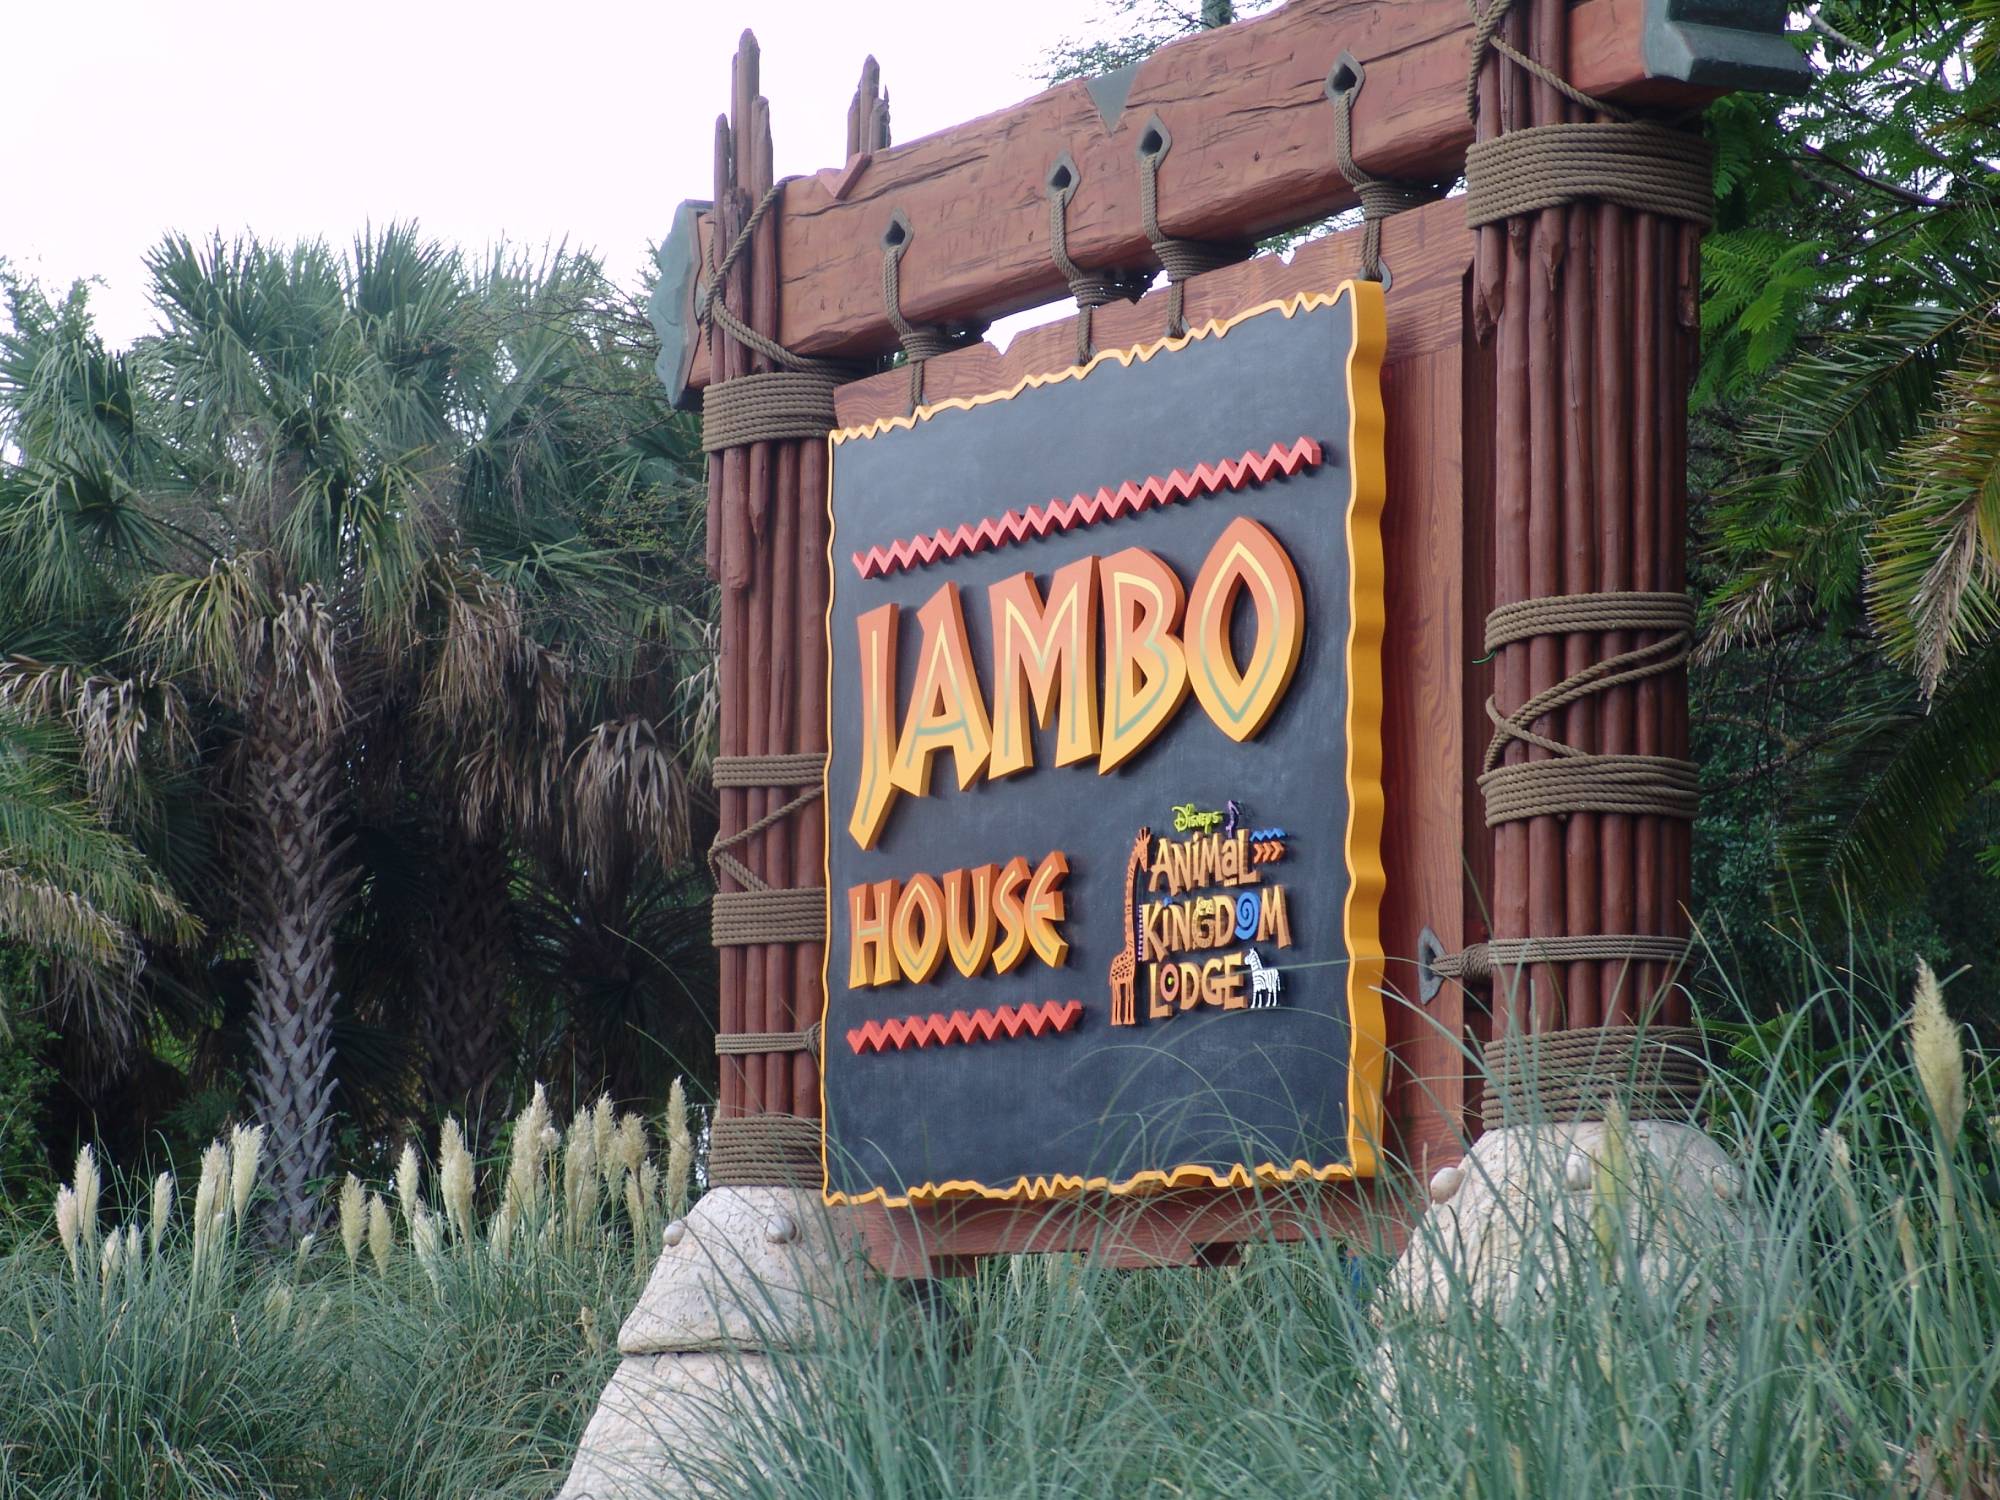 Animal Kingdom Lodge - Jambo House entrance